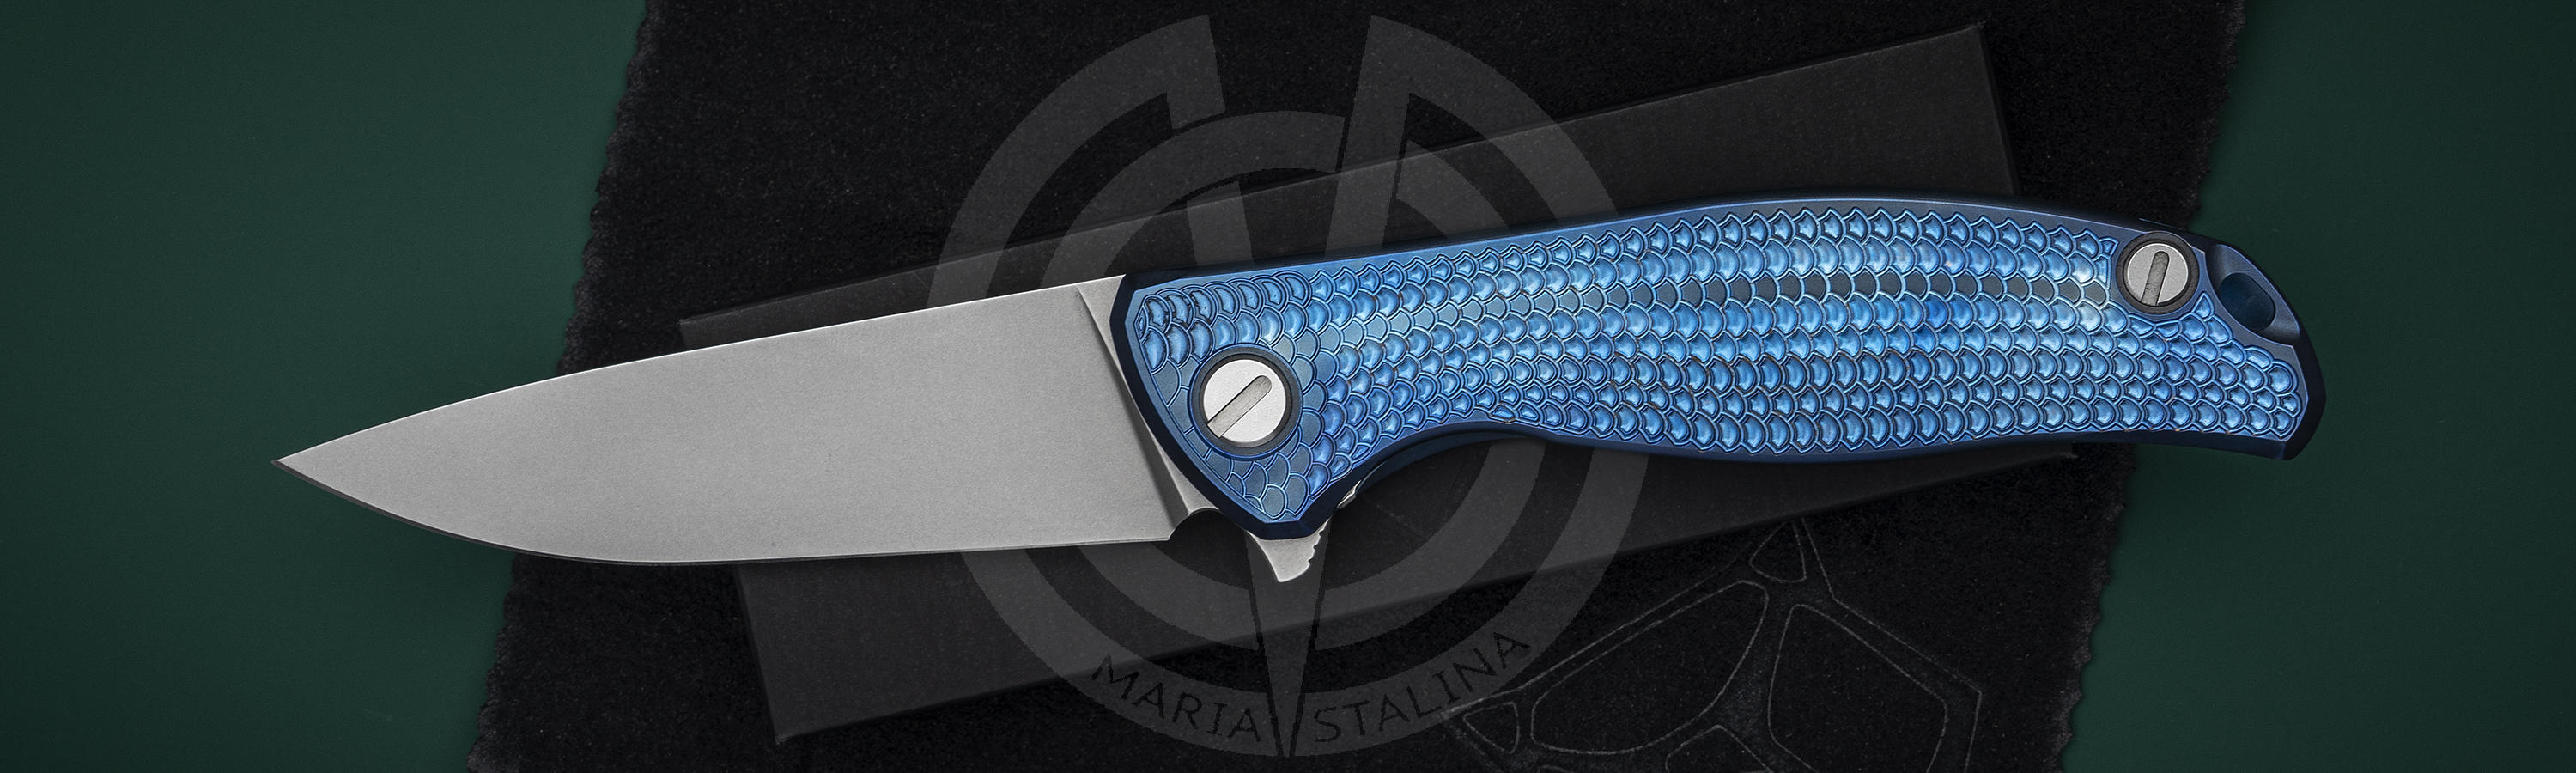 Custom knife SBW Flipper 95 